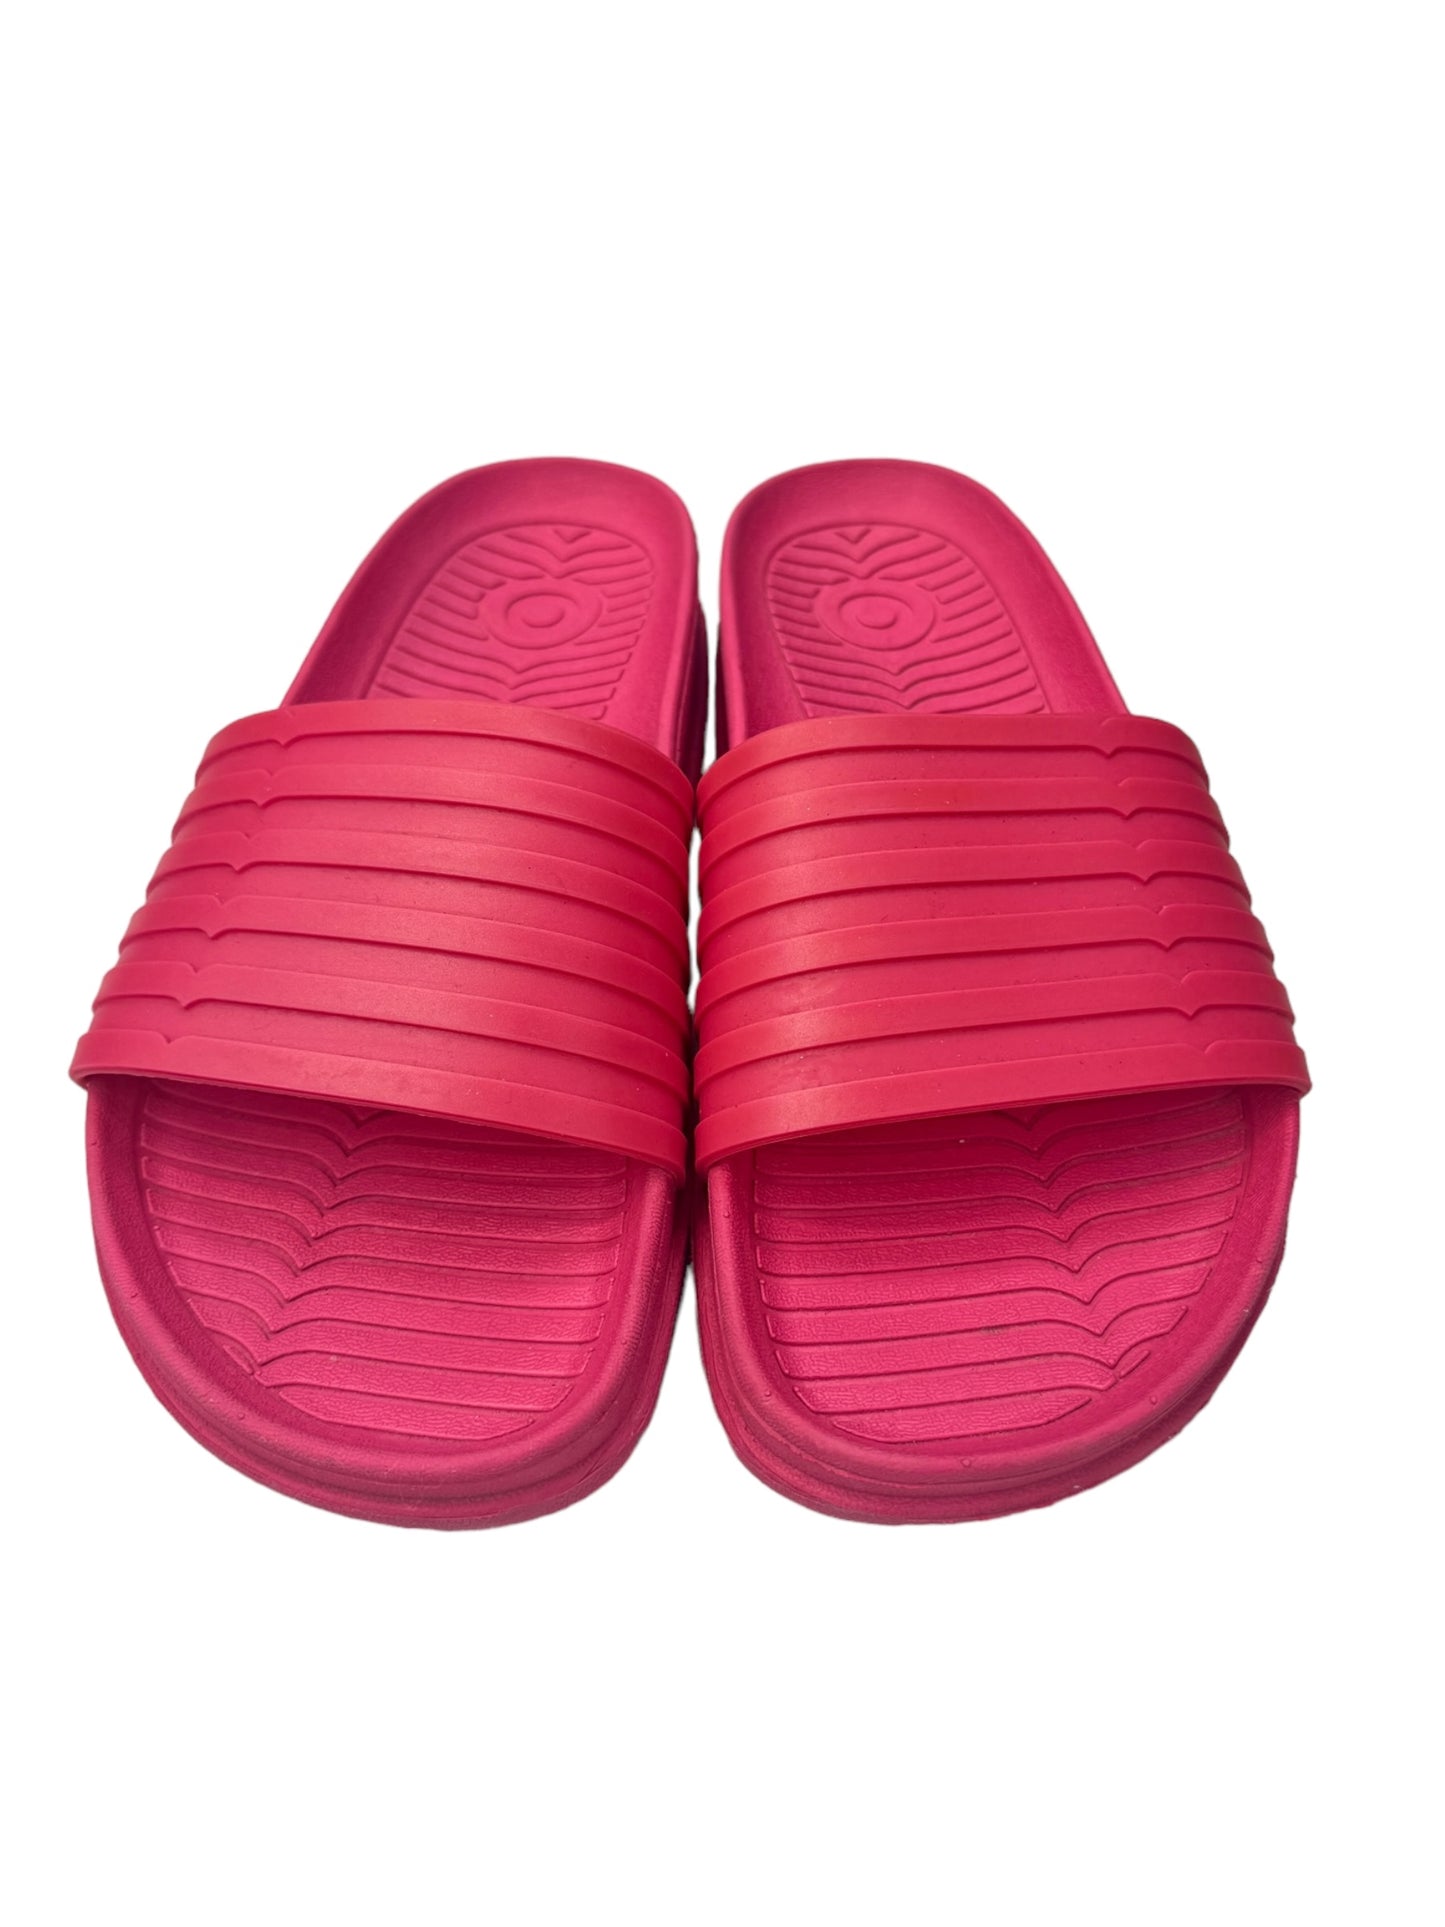 Shoes Flats By Target-designer  Size: 6